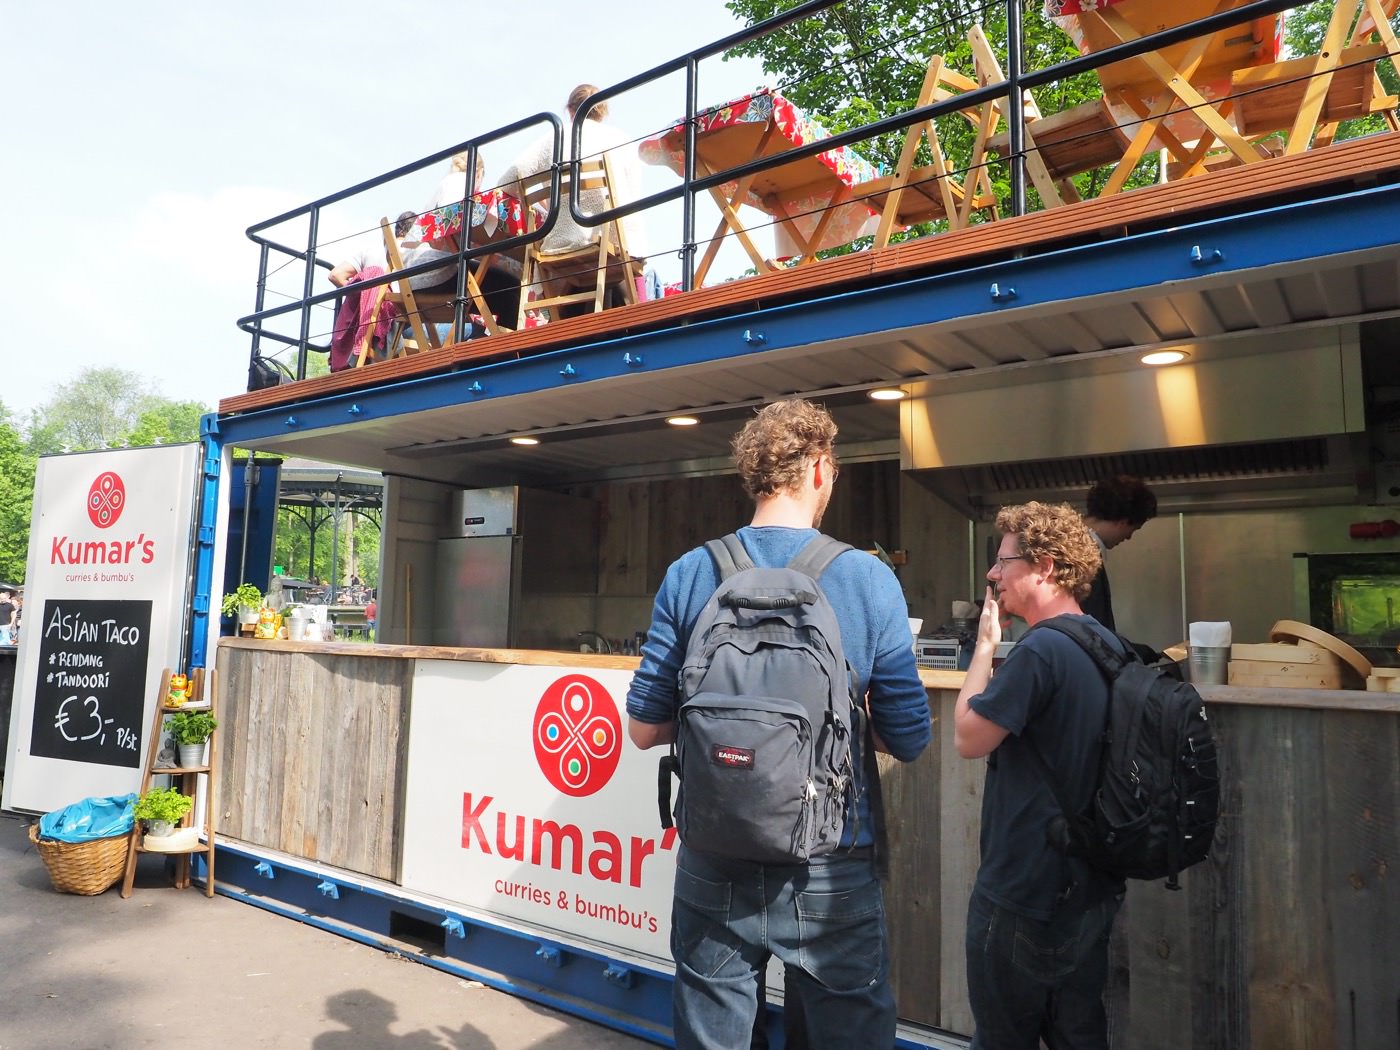 阿姆斯特丹活動 Kookt Music & Food Festival @ Oosterpark 美食與音樂祭 - 一口冒險 Bitesized Adventure